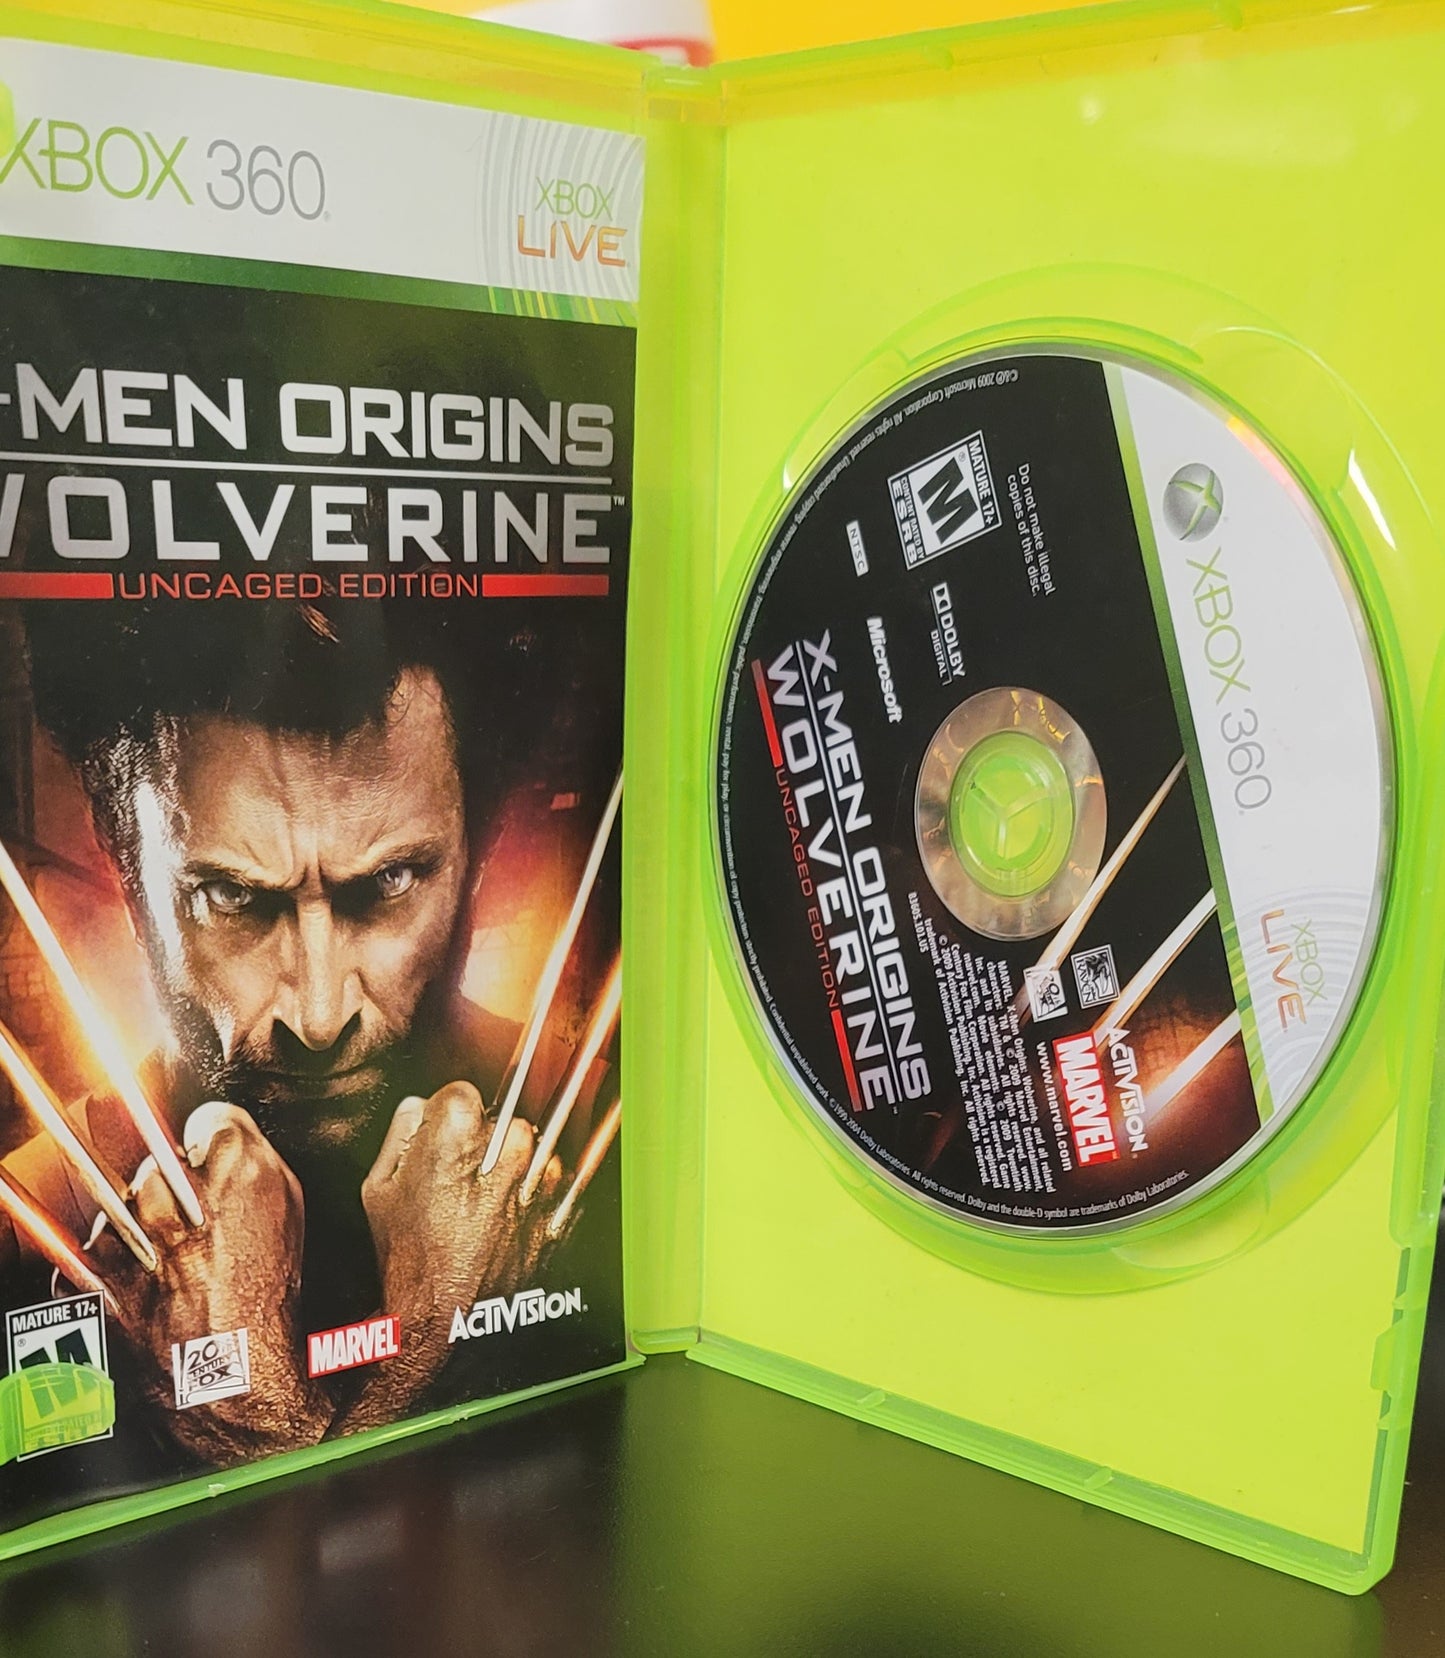 X-Men Origins Wolverine - Xb360 - Used